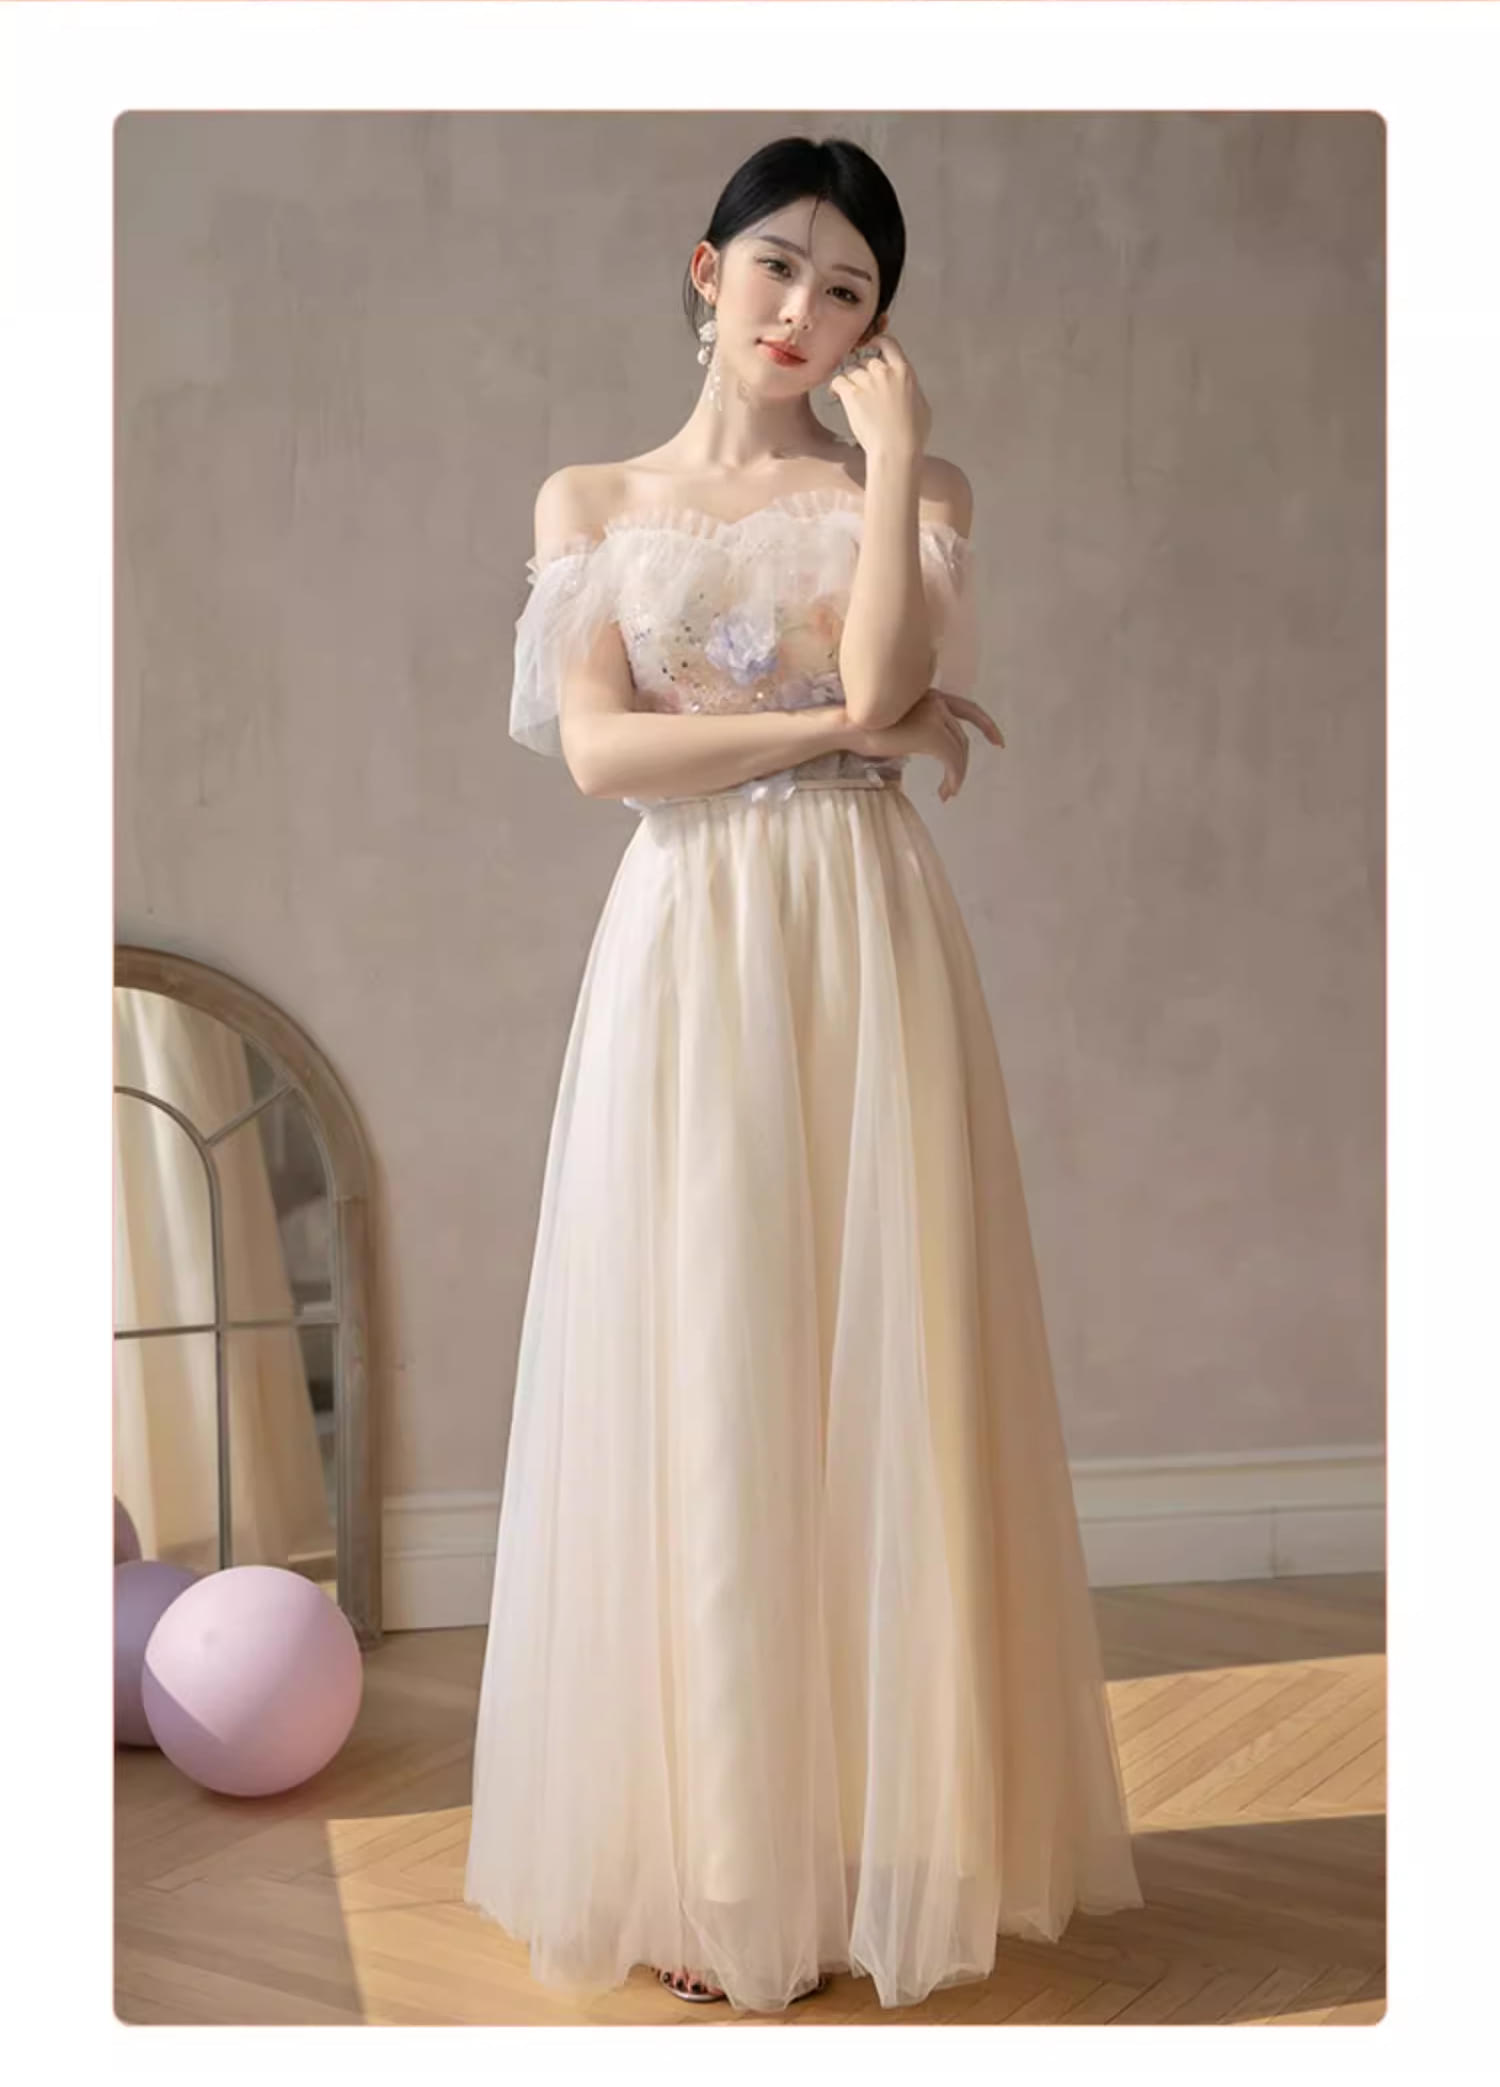 Romance-Flower-Champagne-Bridal-Party-Gown-Fashion-Bridesmaid-Dress25